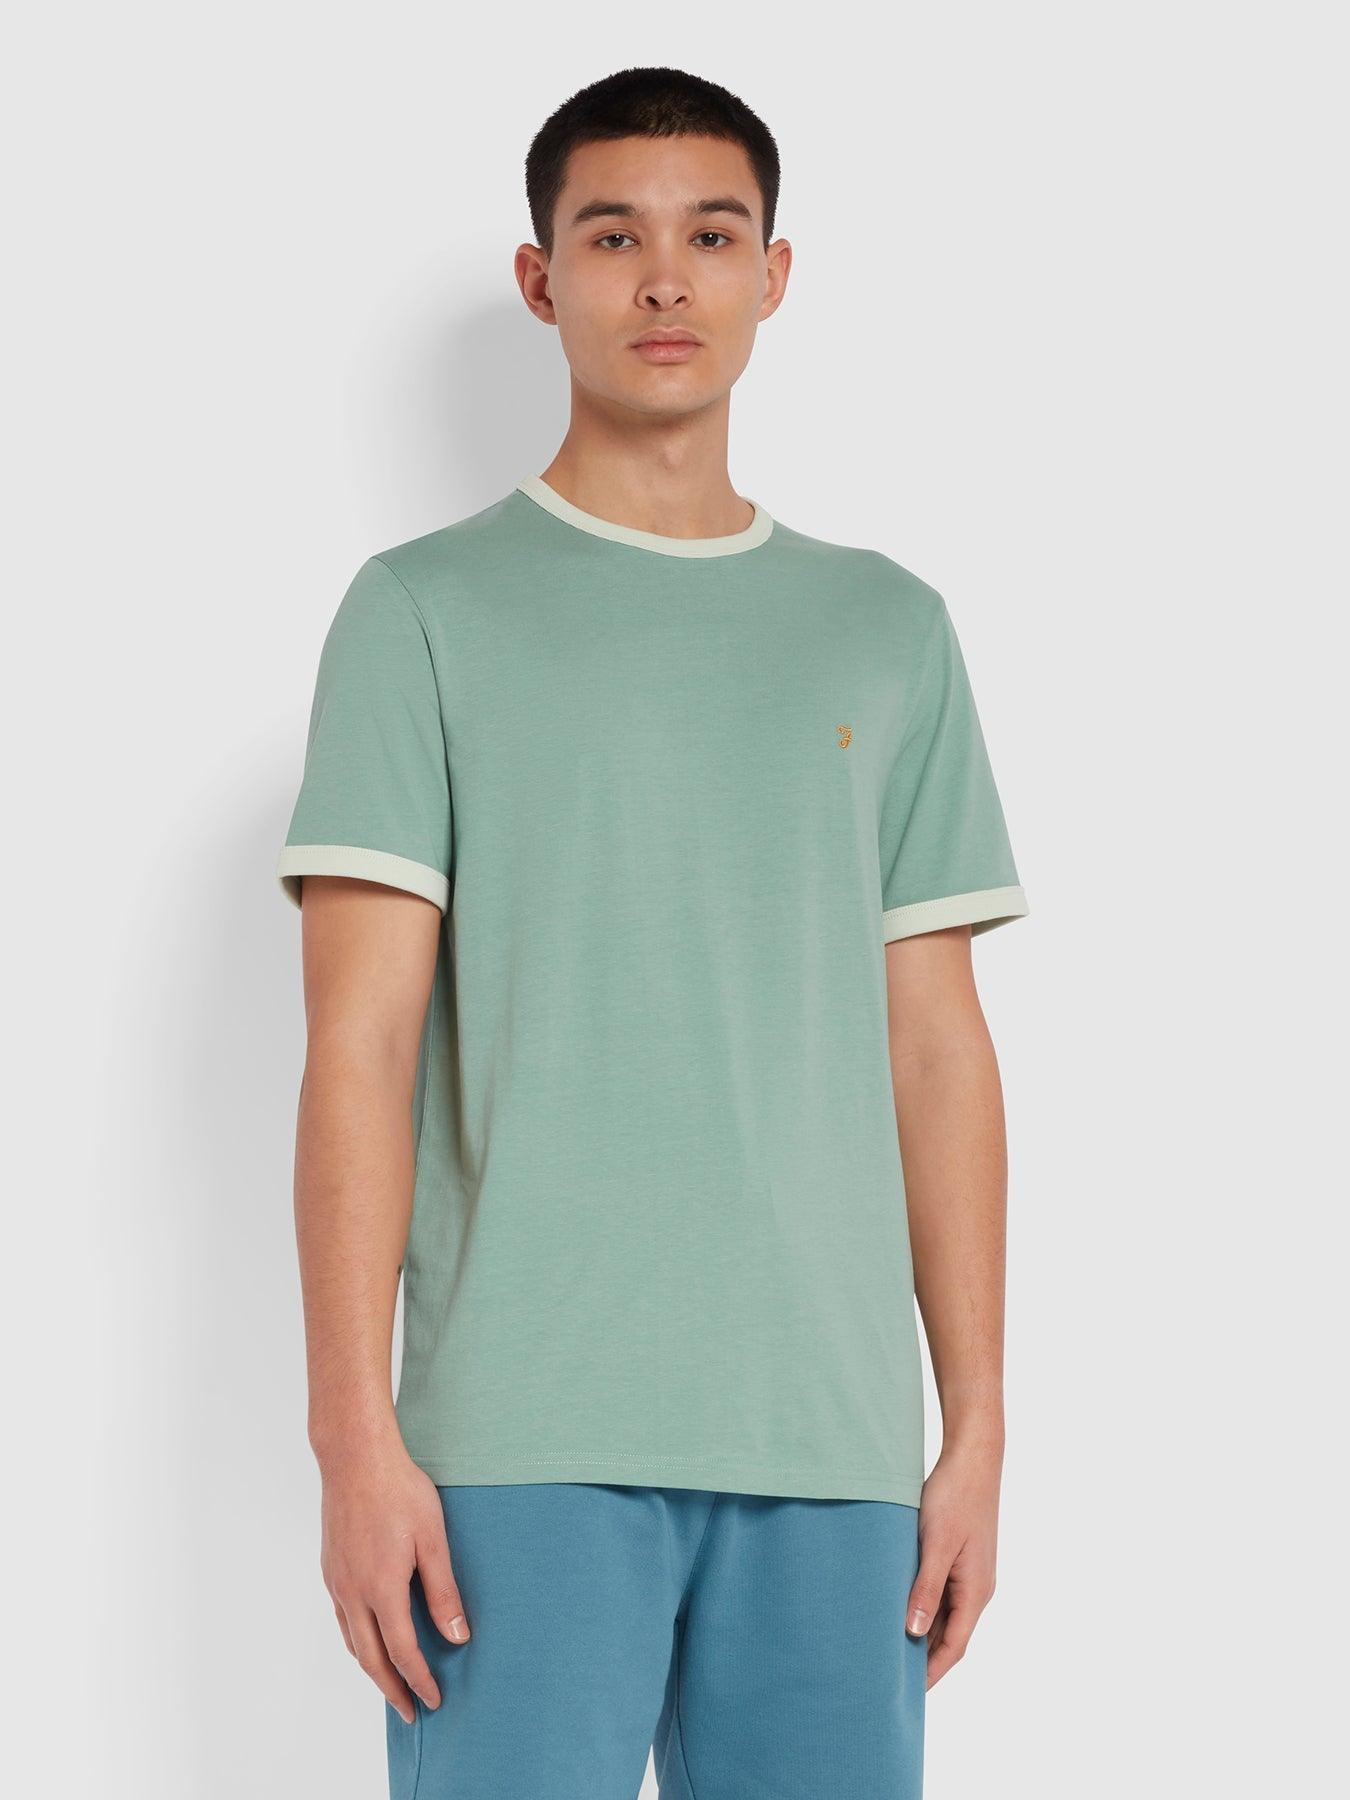 Camiseta Groves de corte ajustado con ribete de algodón orgánico Jade Green - ECRU